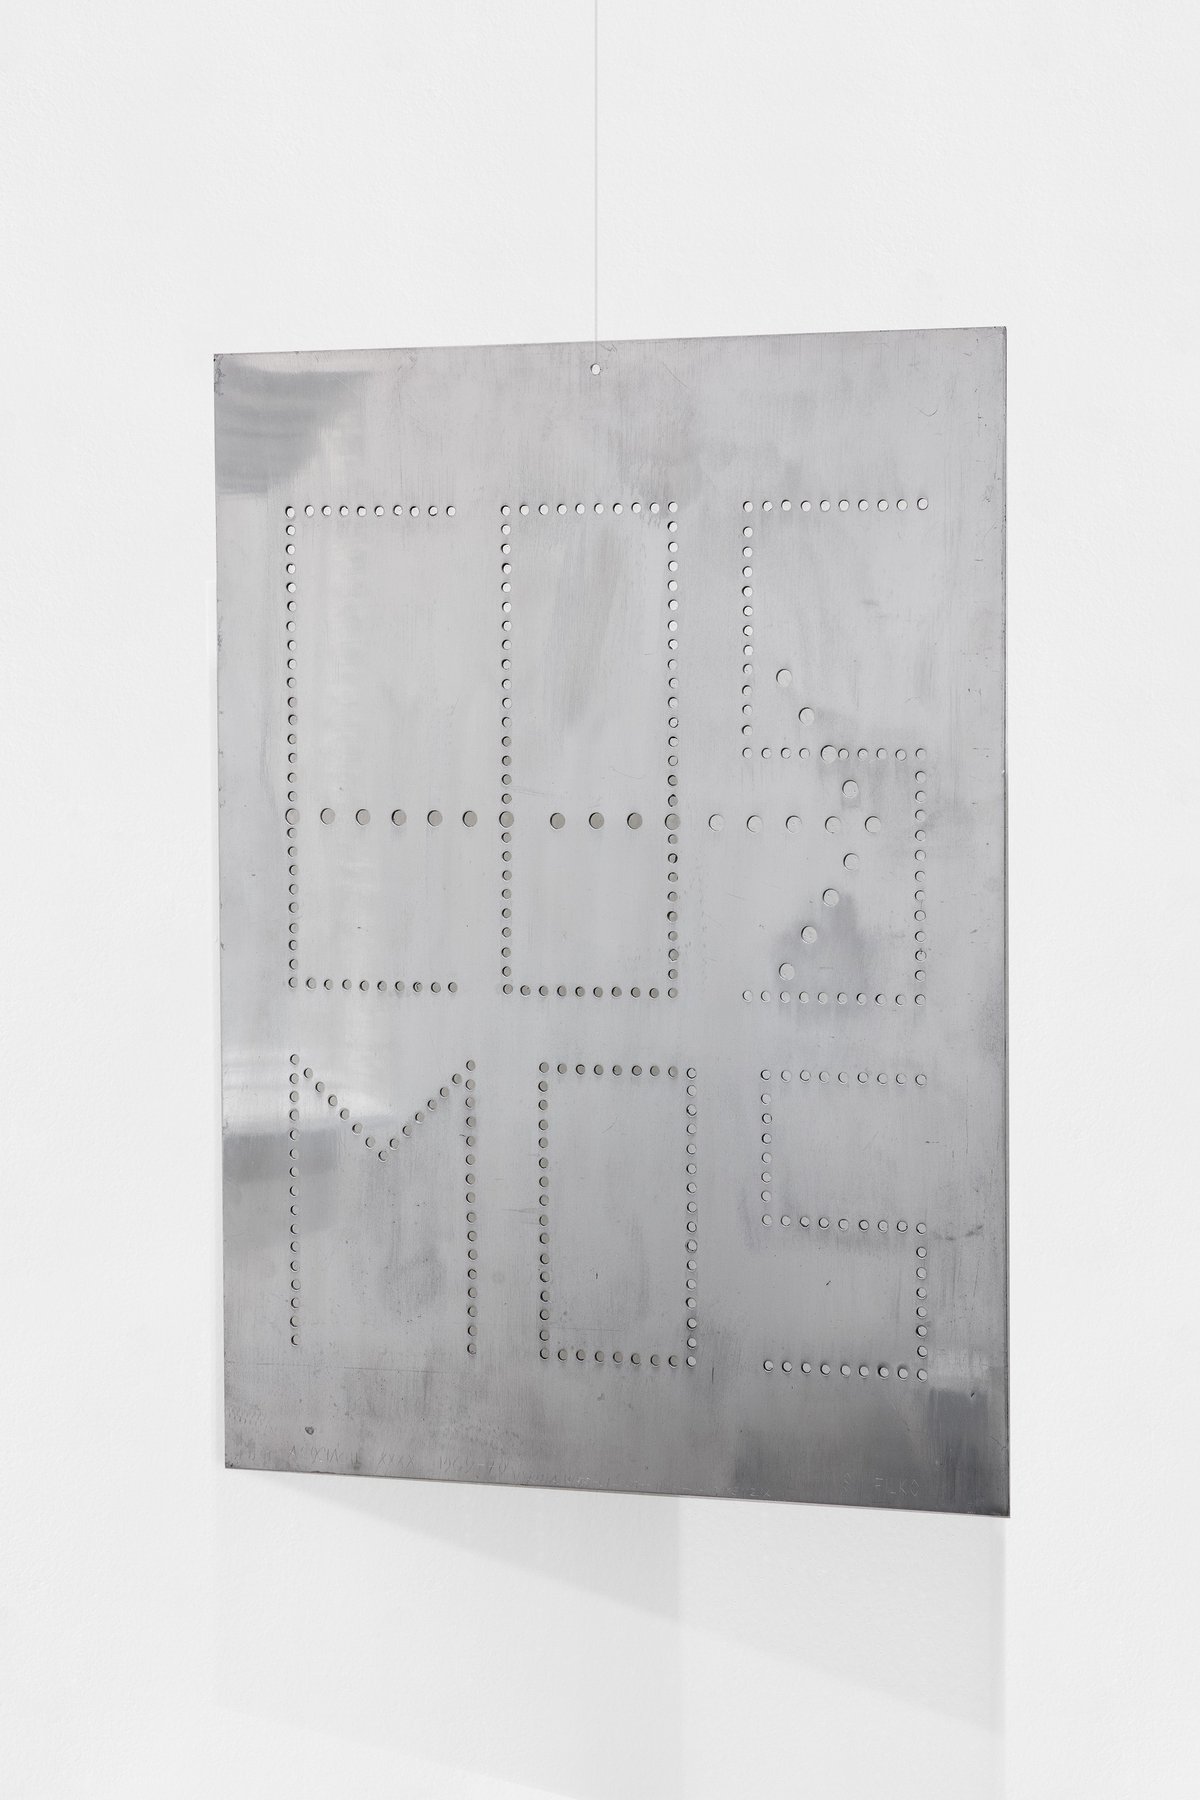 Stano Filko Associations XXXX (COS-MOS), 1969-70Aluminium sheet, perforation, polishing59.5 x 42.5 cm